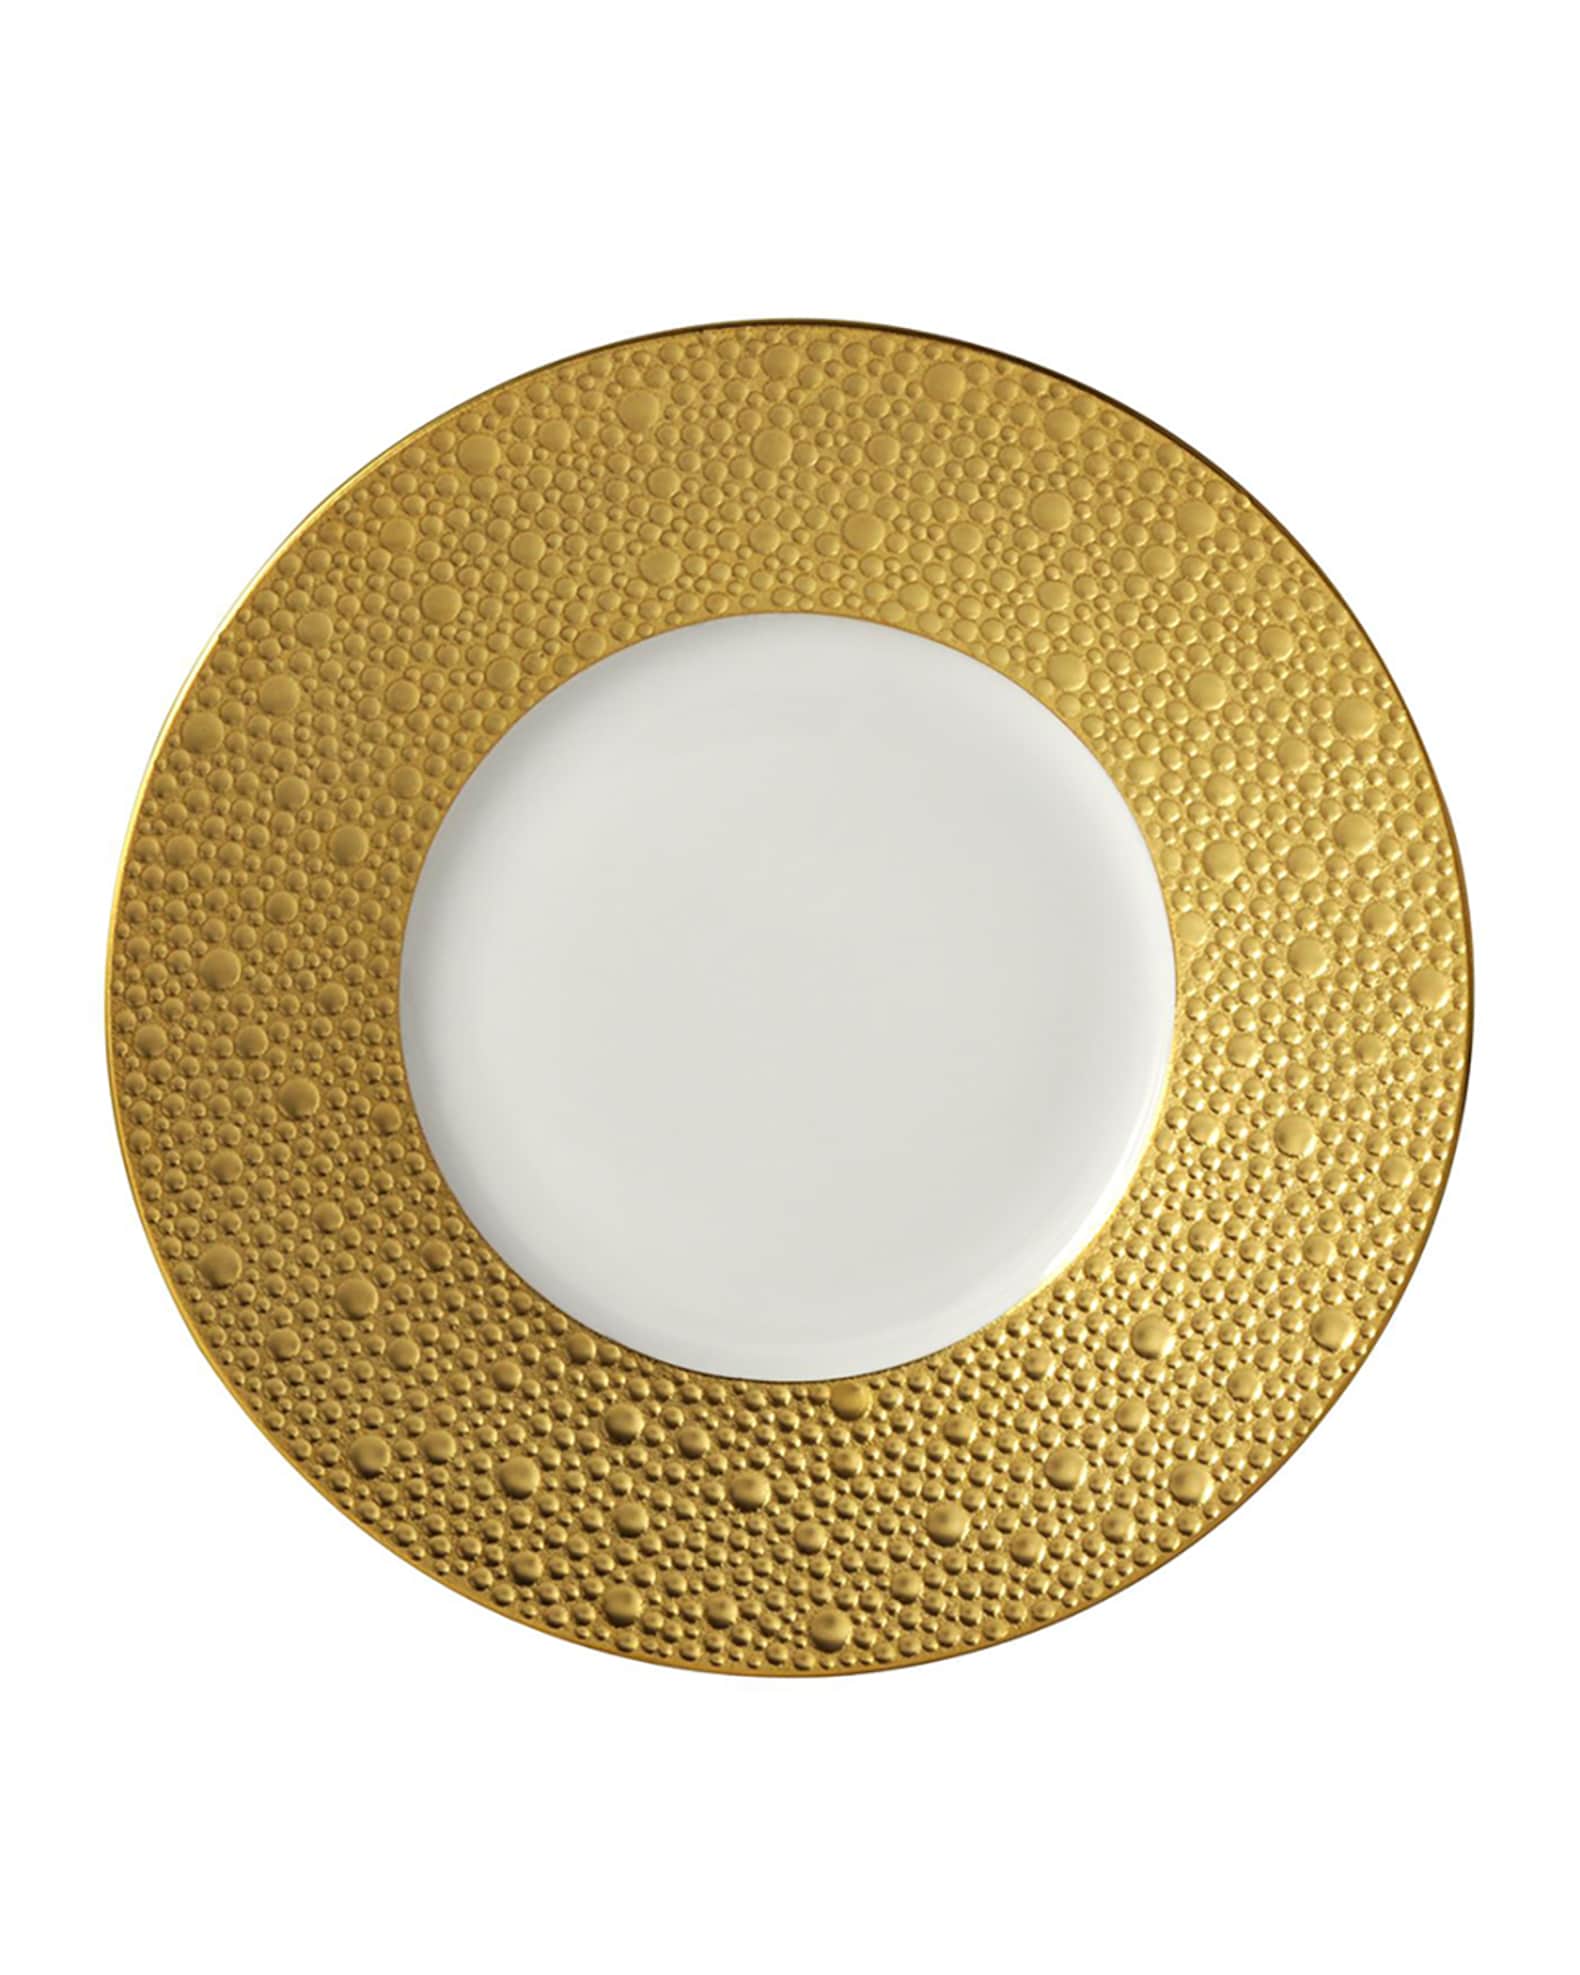 Bernardaud Ecume Gold Bread & Butter Plate | Neiman Marcus